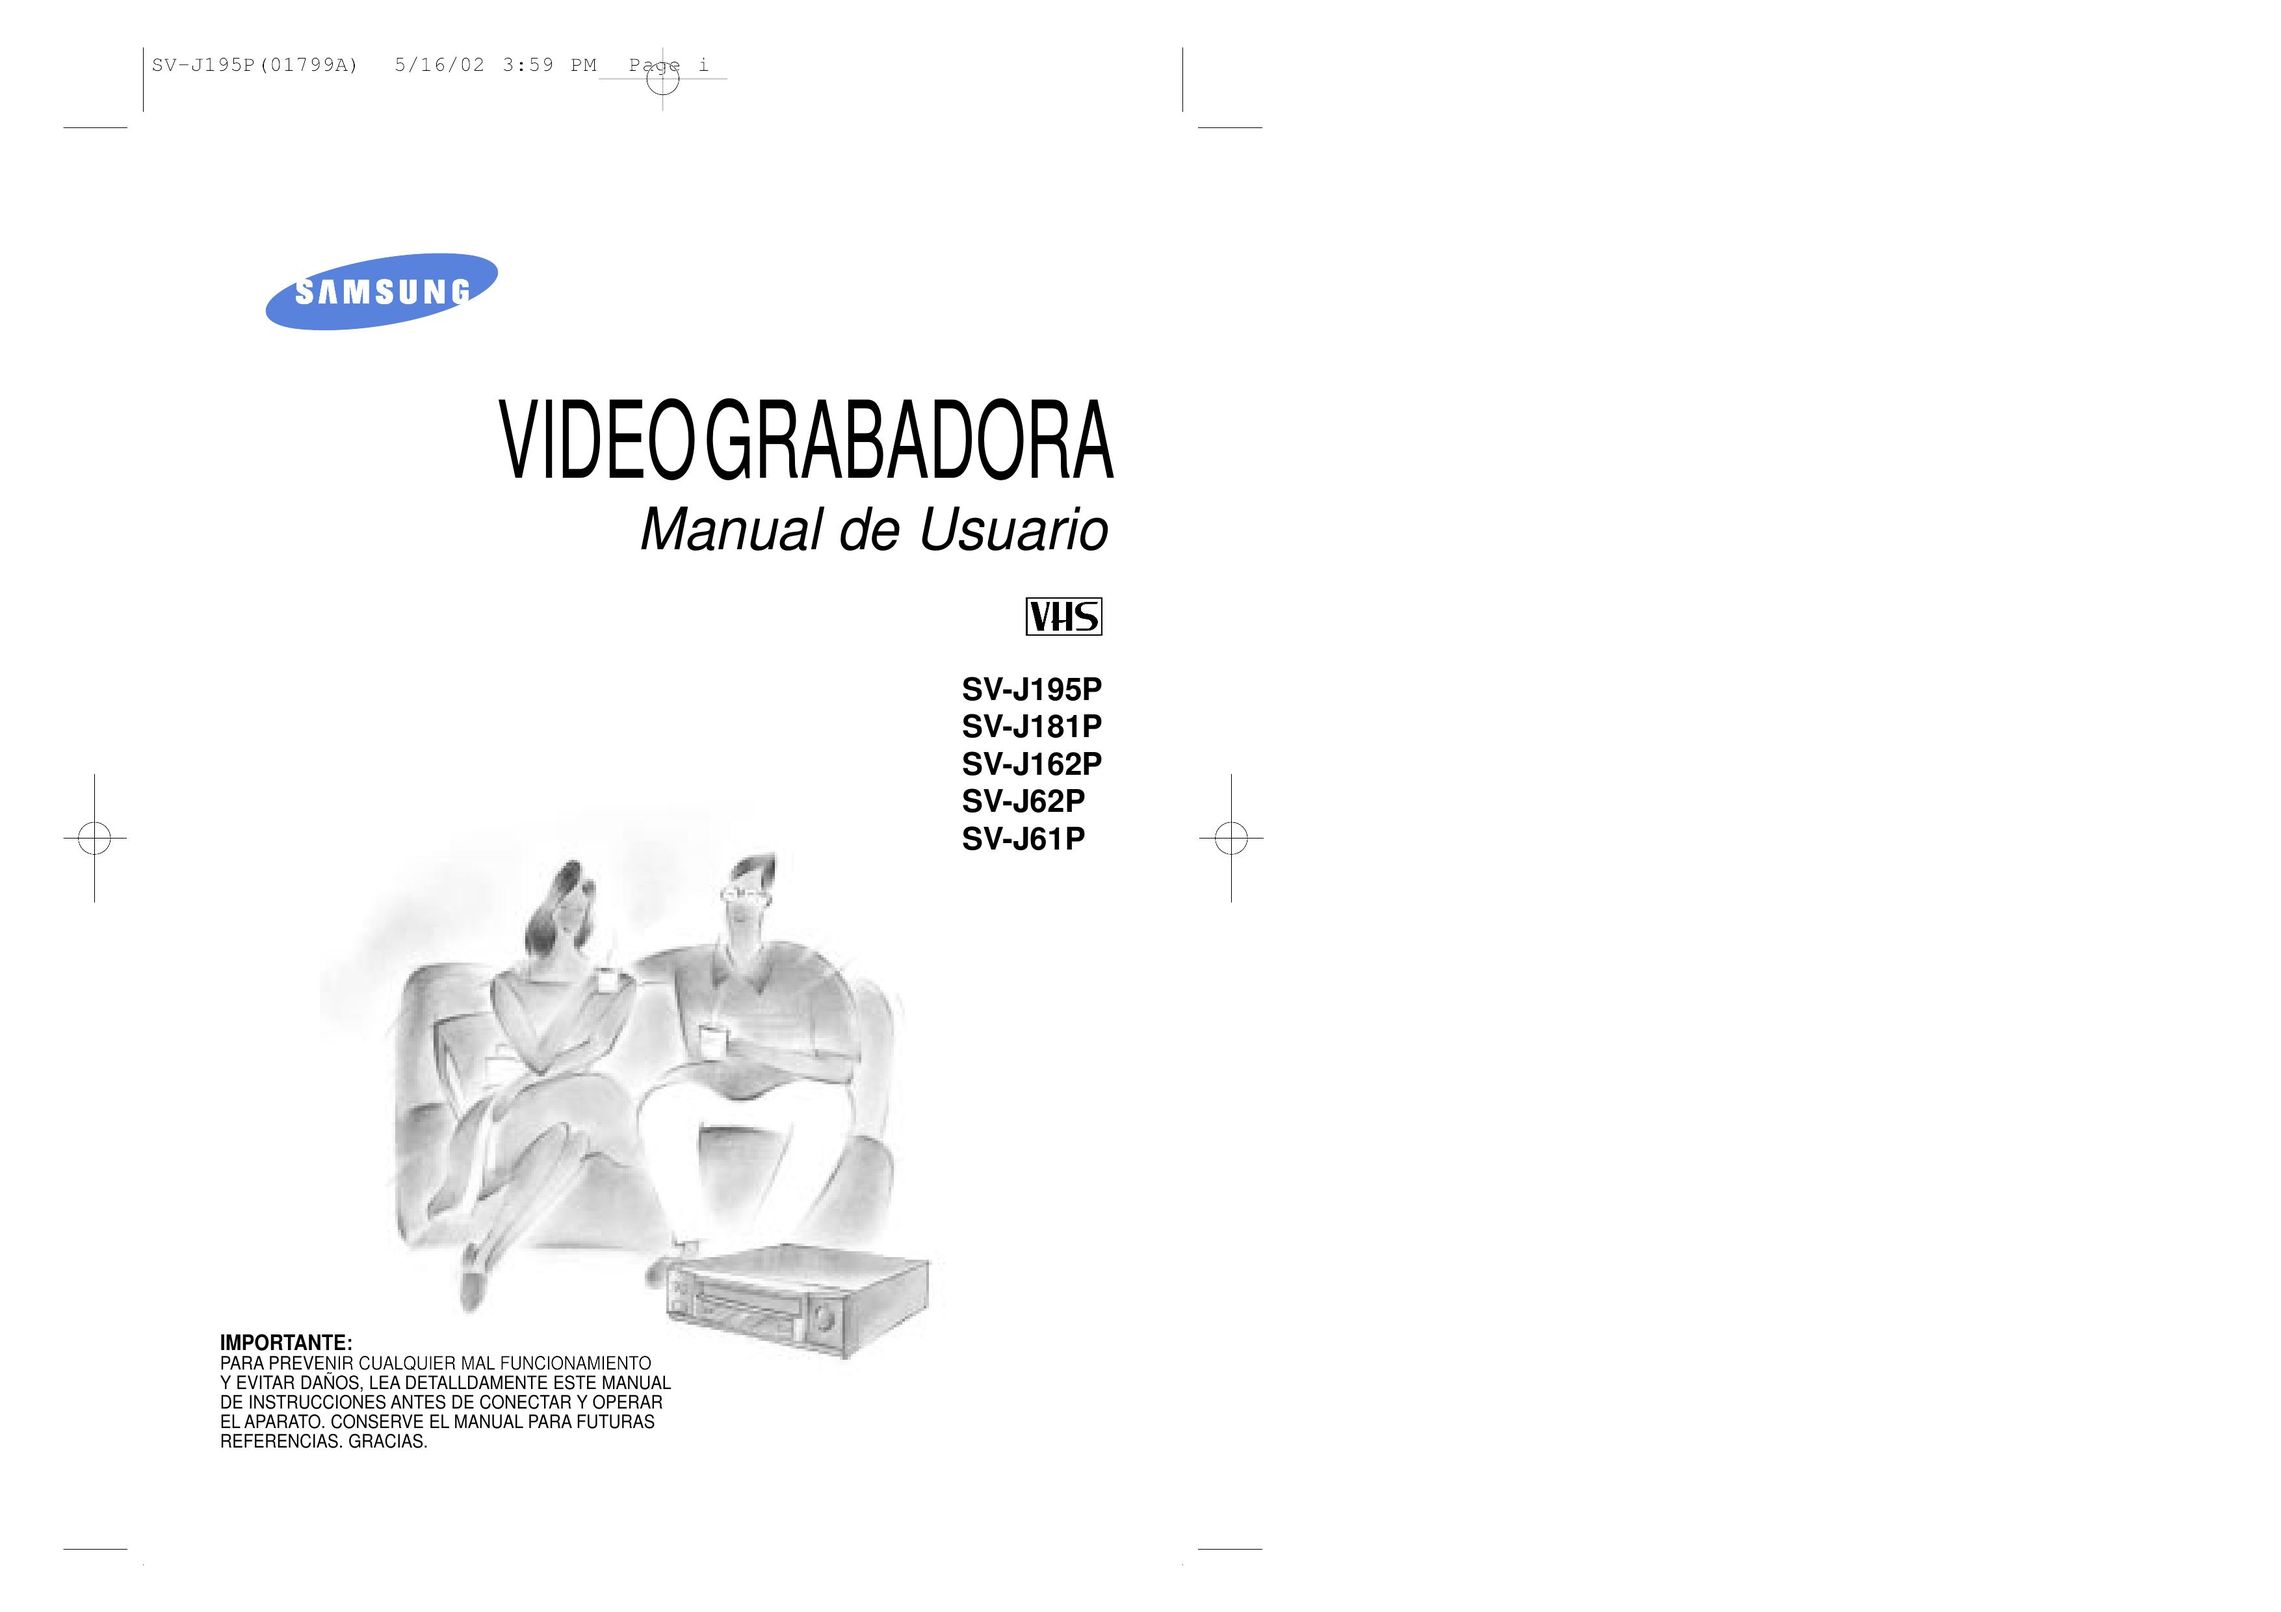 Samsung SV-J61P VCR User Manual